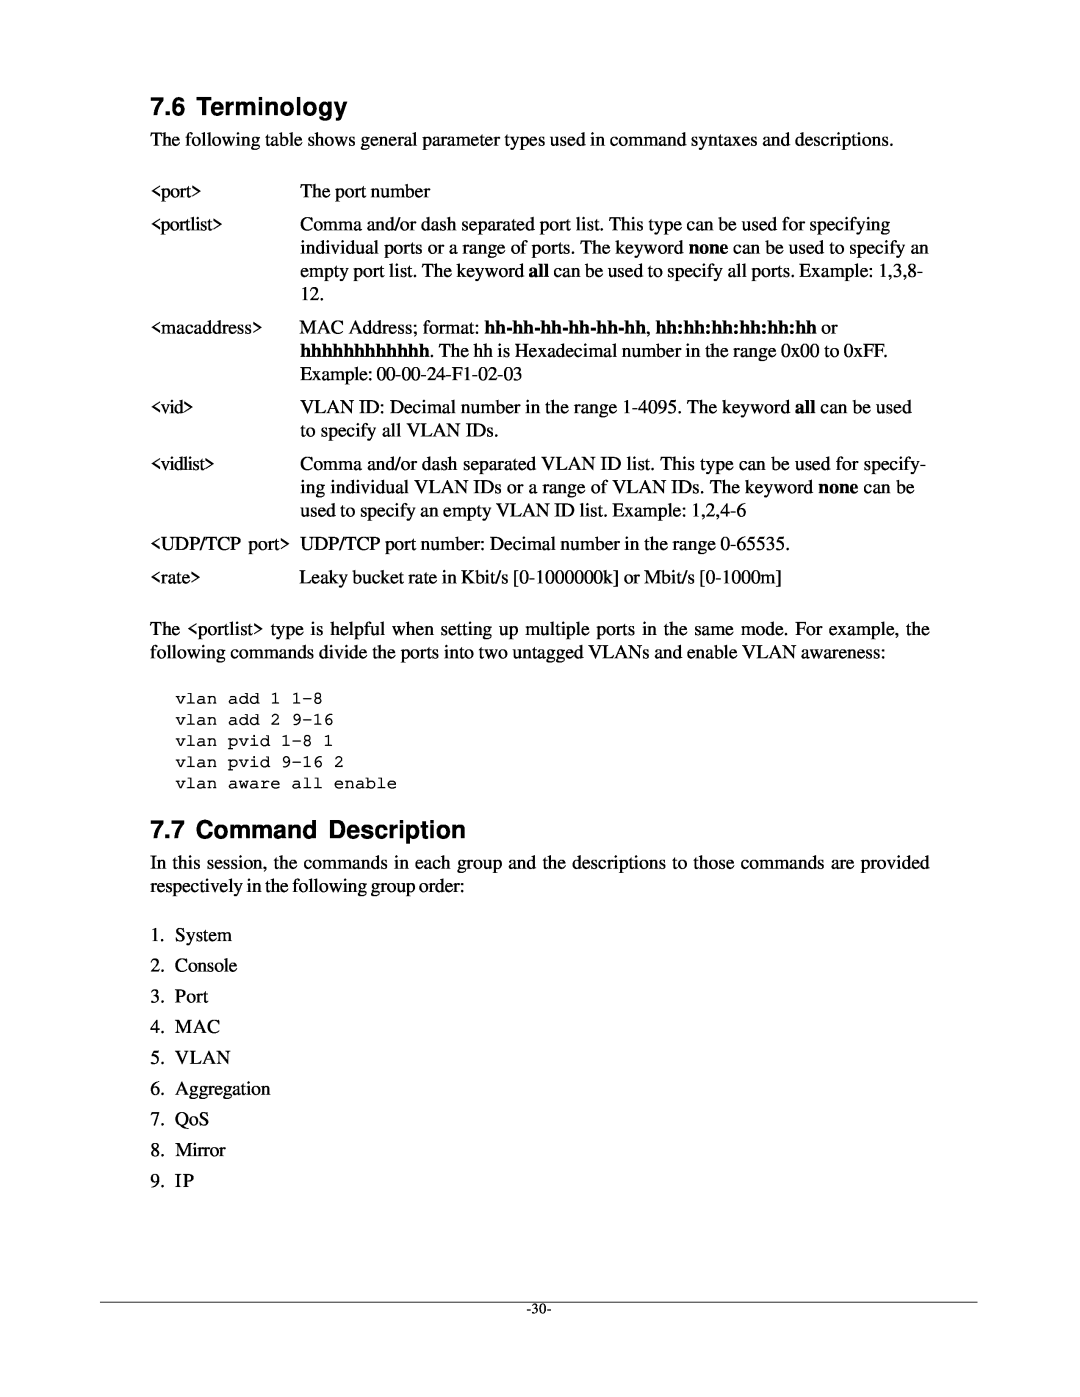 KTI Networks kgs-1601 manual Terminology, Command Description, MAC Address format hh-hh-hh-hh-hh-hh, hhhhhhhhhhhh or 